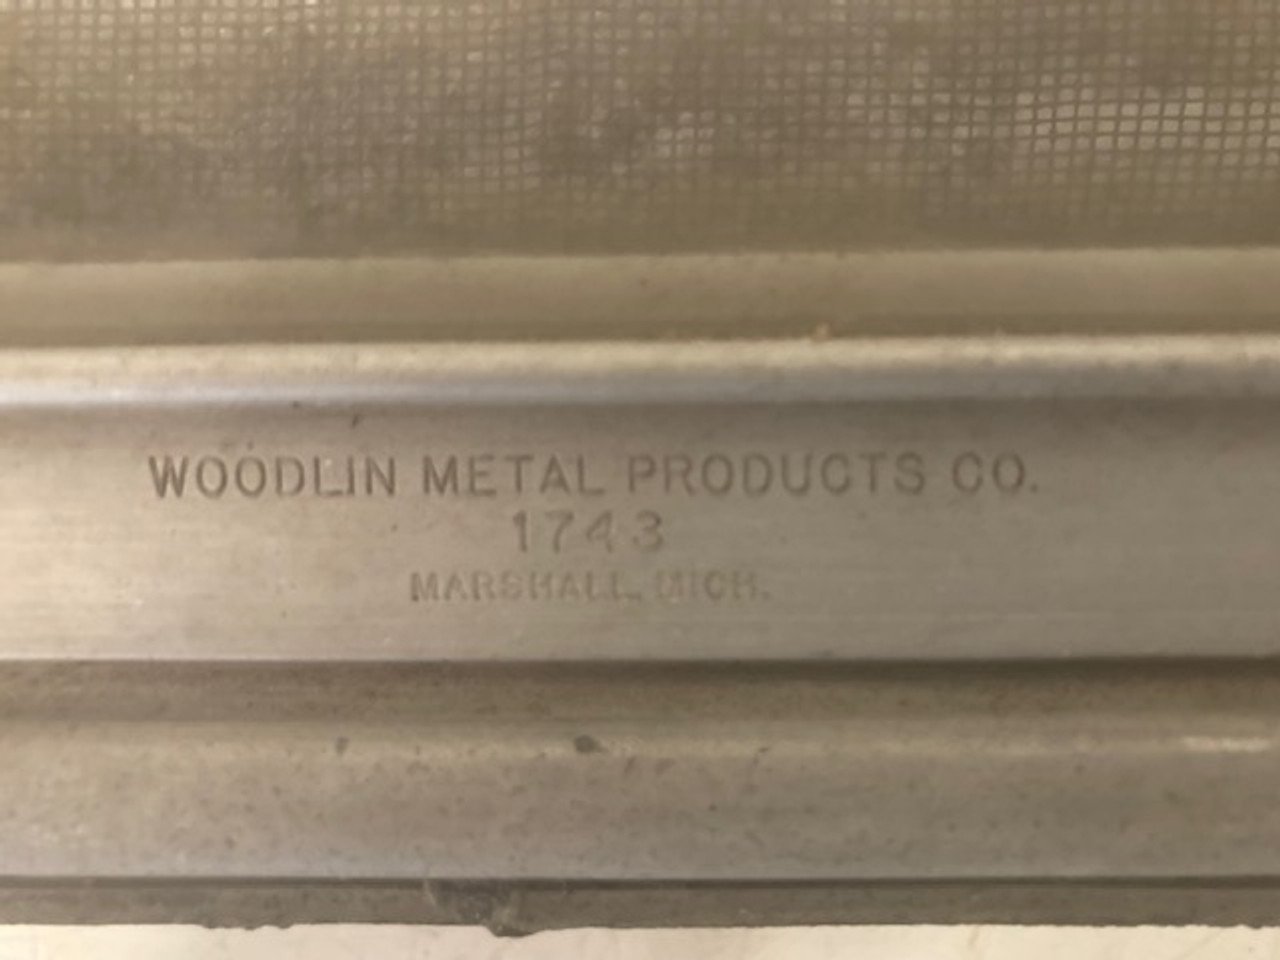 Woodlin 1743 Aluminum Window